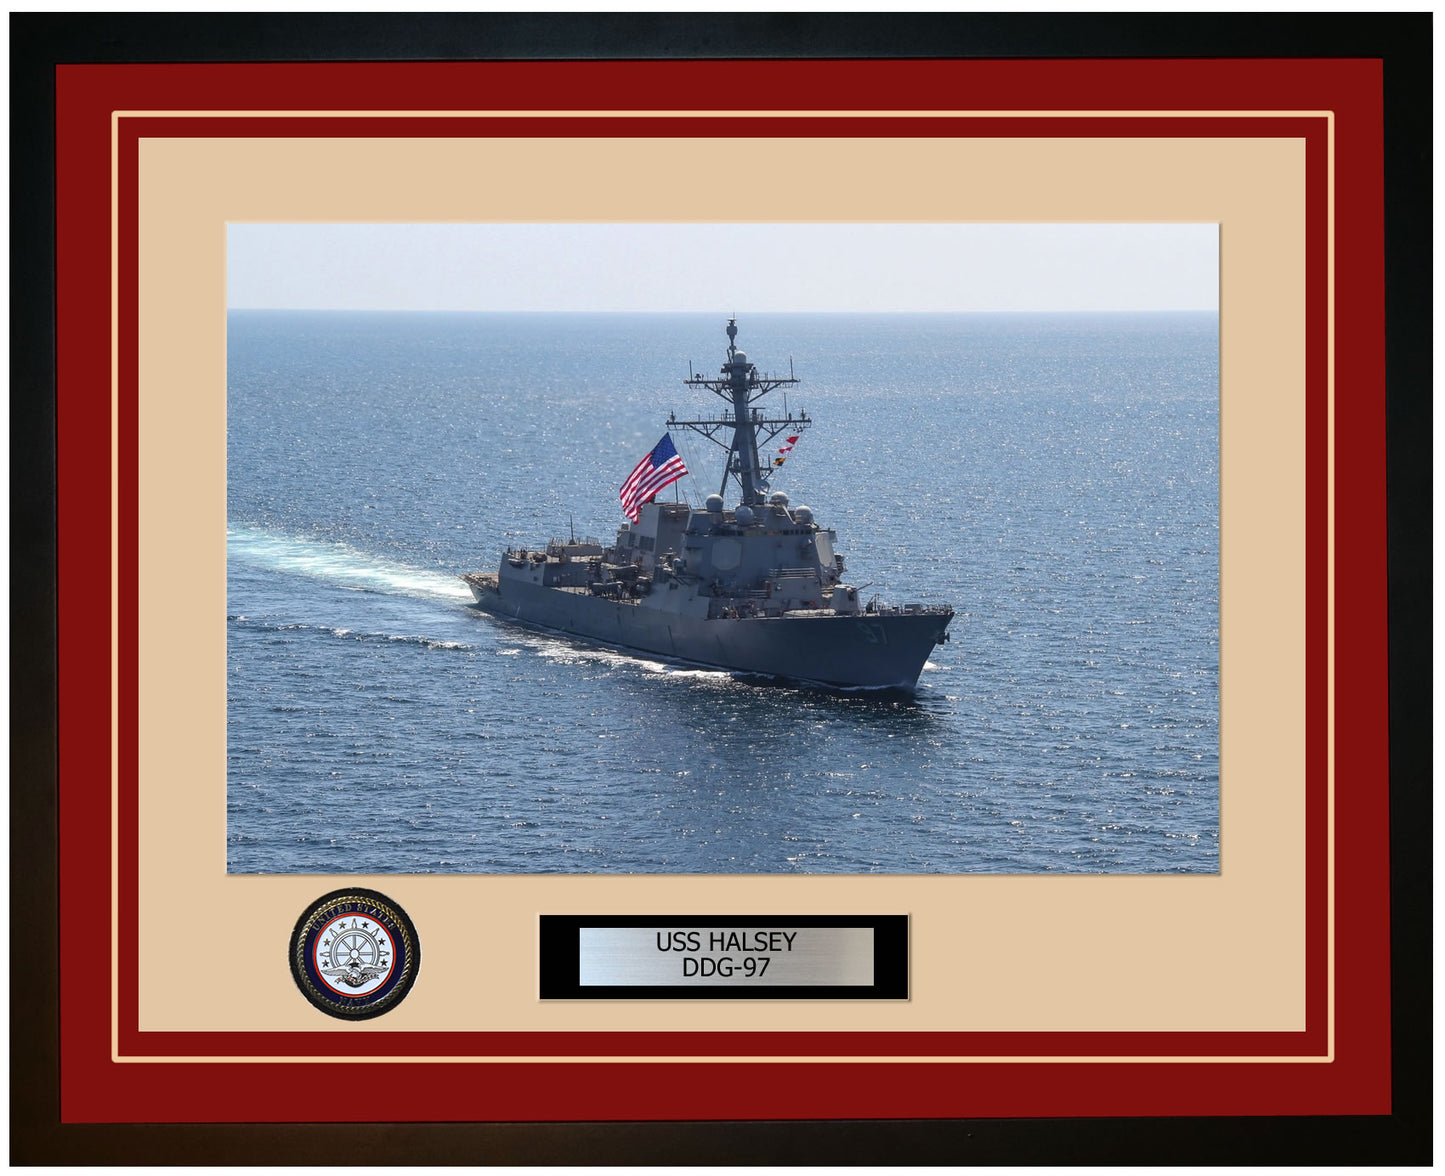 USS HALSEY DDG-97 Framed Navy Ship Photo Burgundy